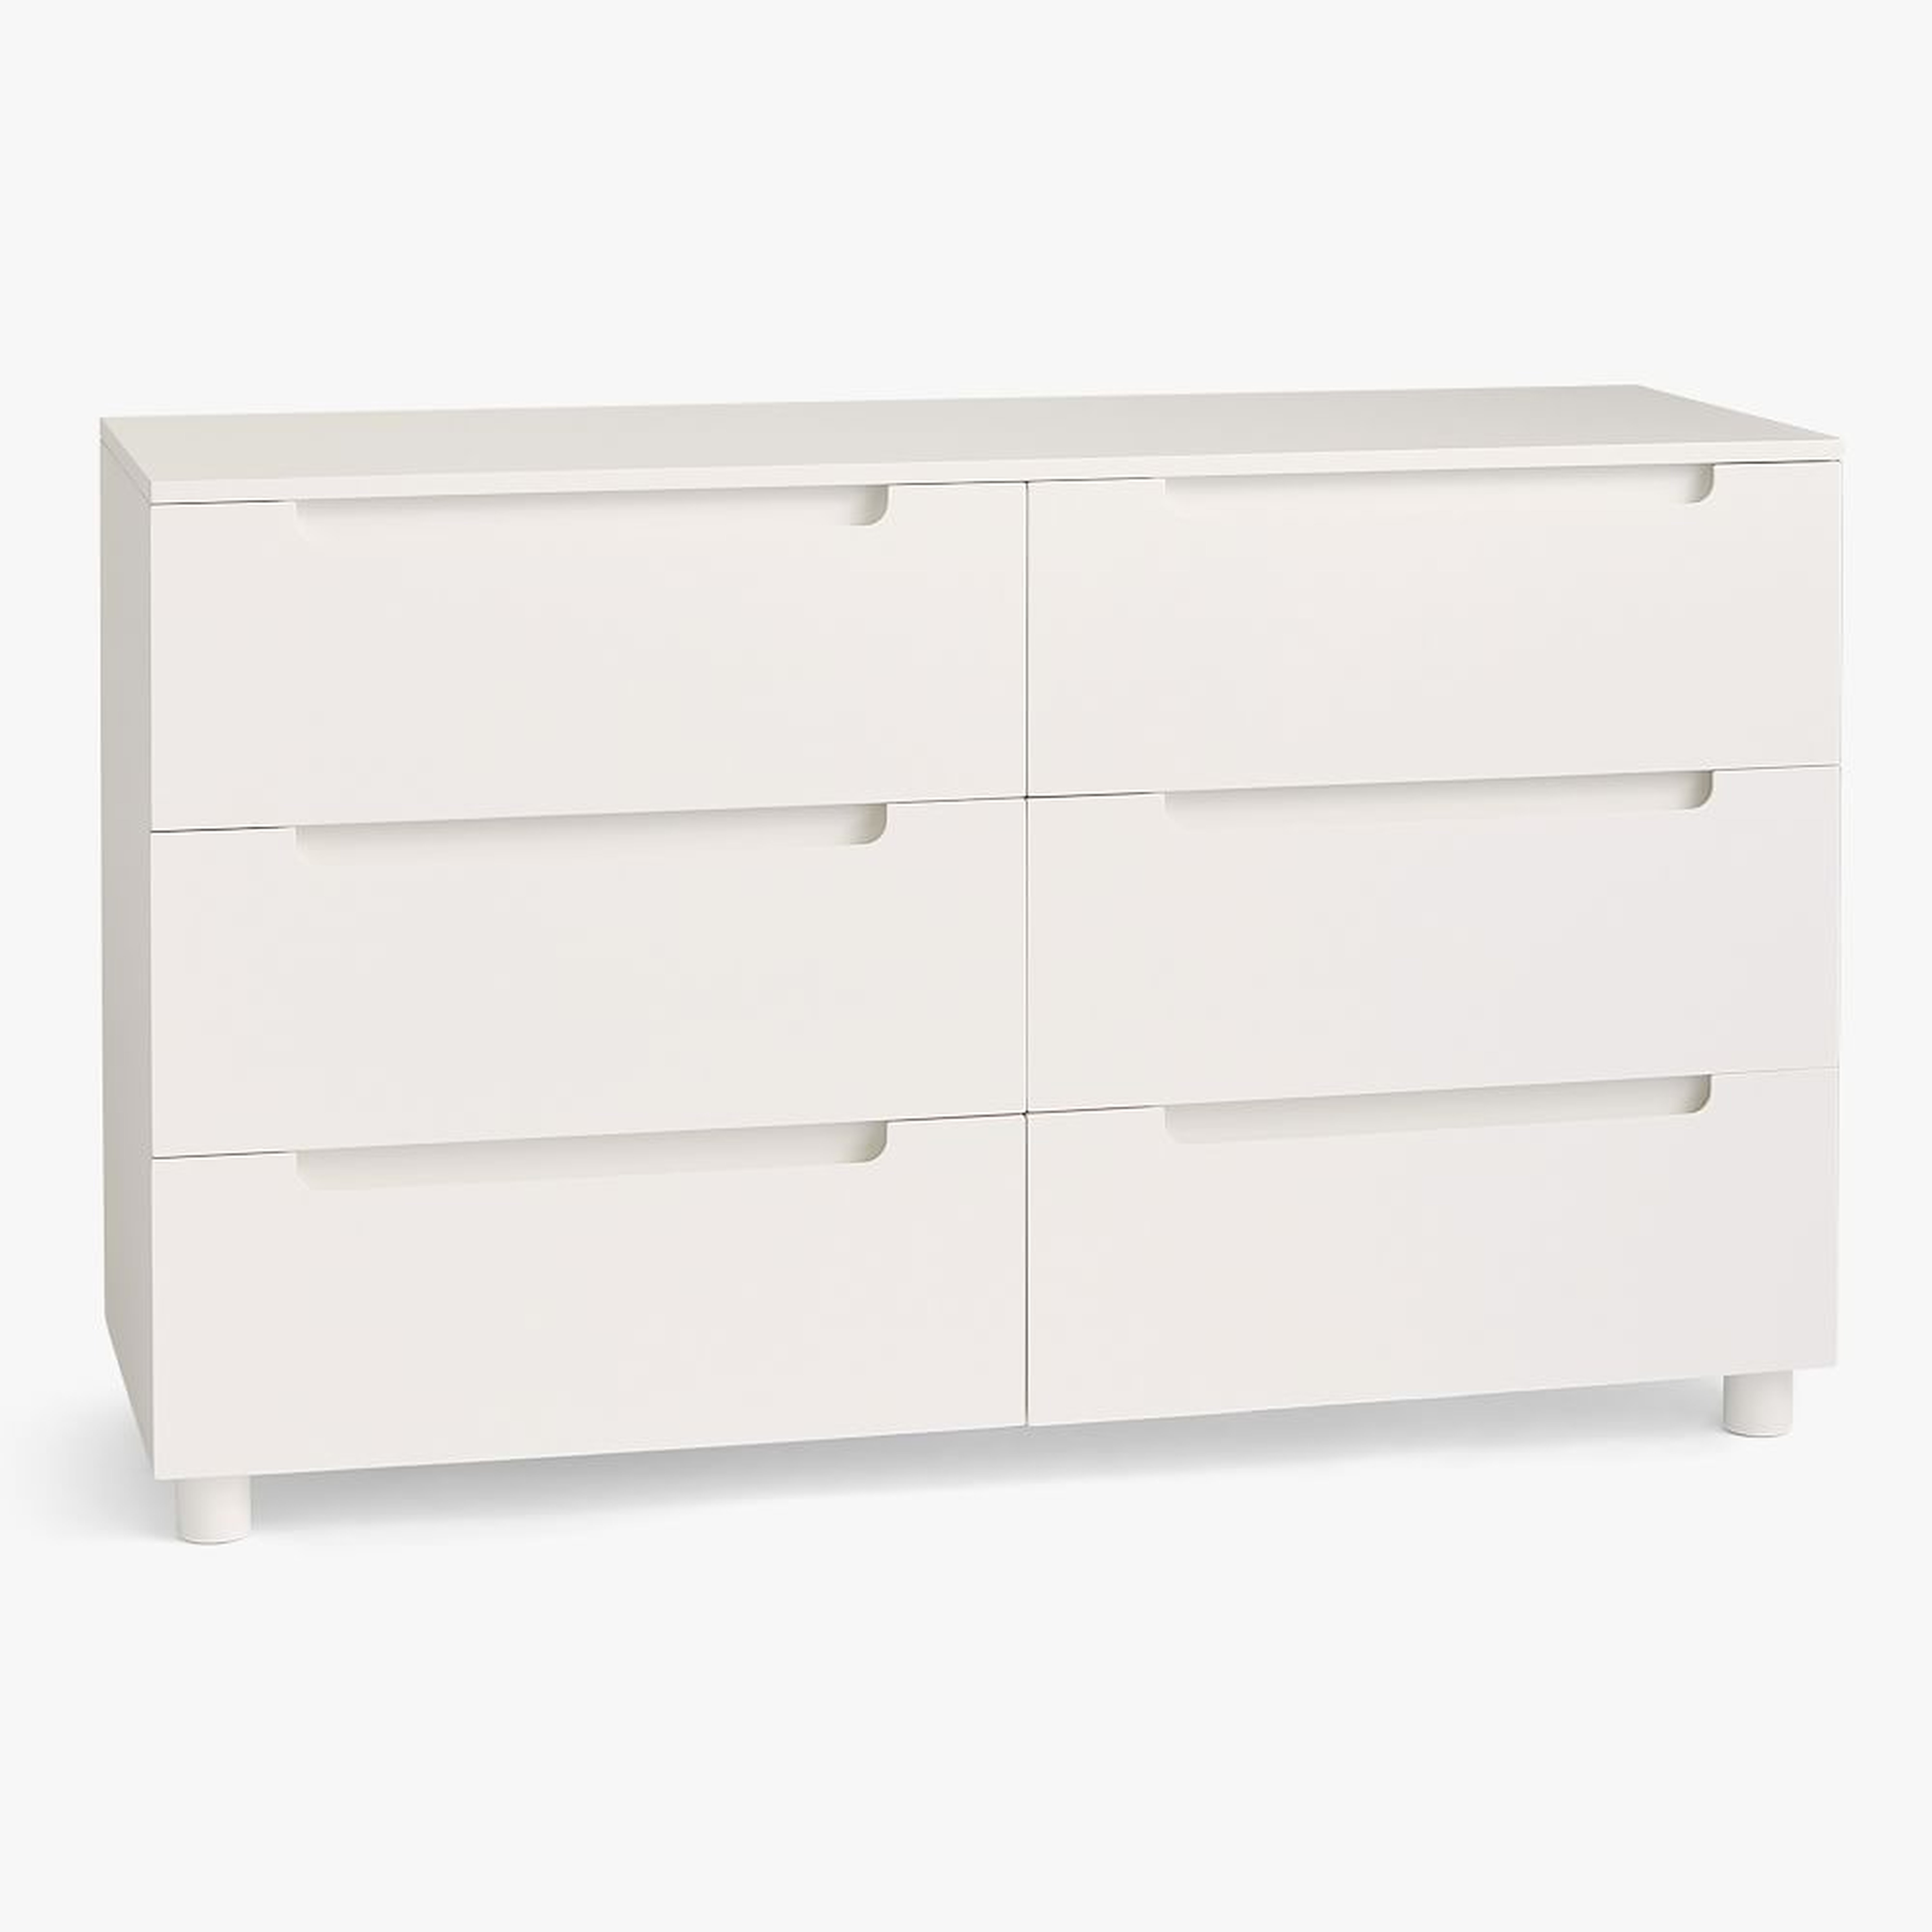 Arlen Extra Wide Dresser, Simply White, WE Kids - West Elm